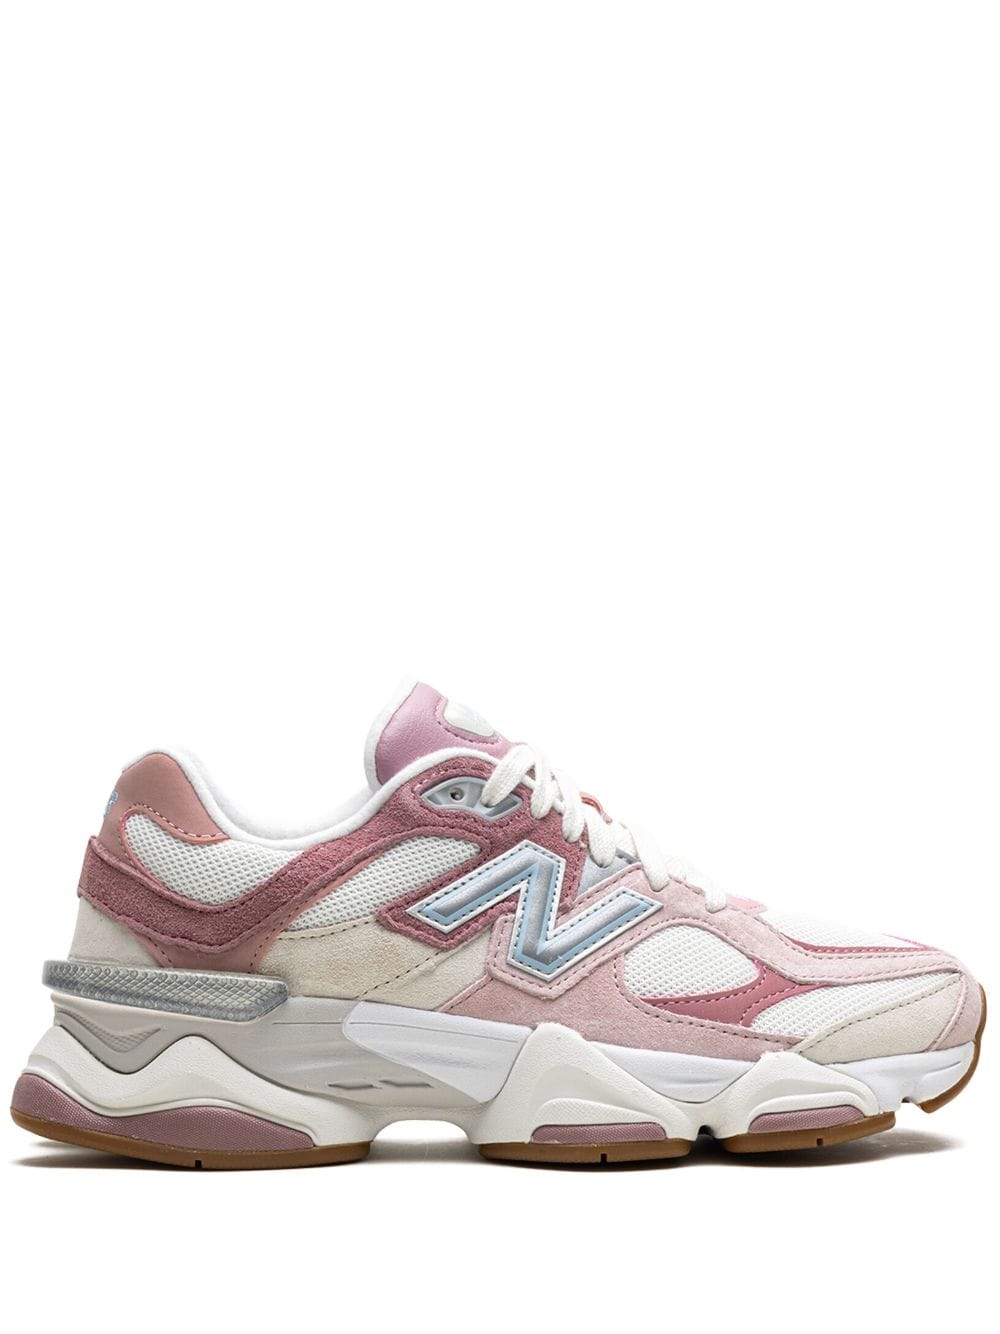 New Balance 9060 "Rose Pink" sneakers von New Balance